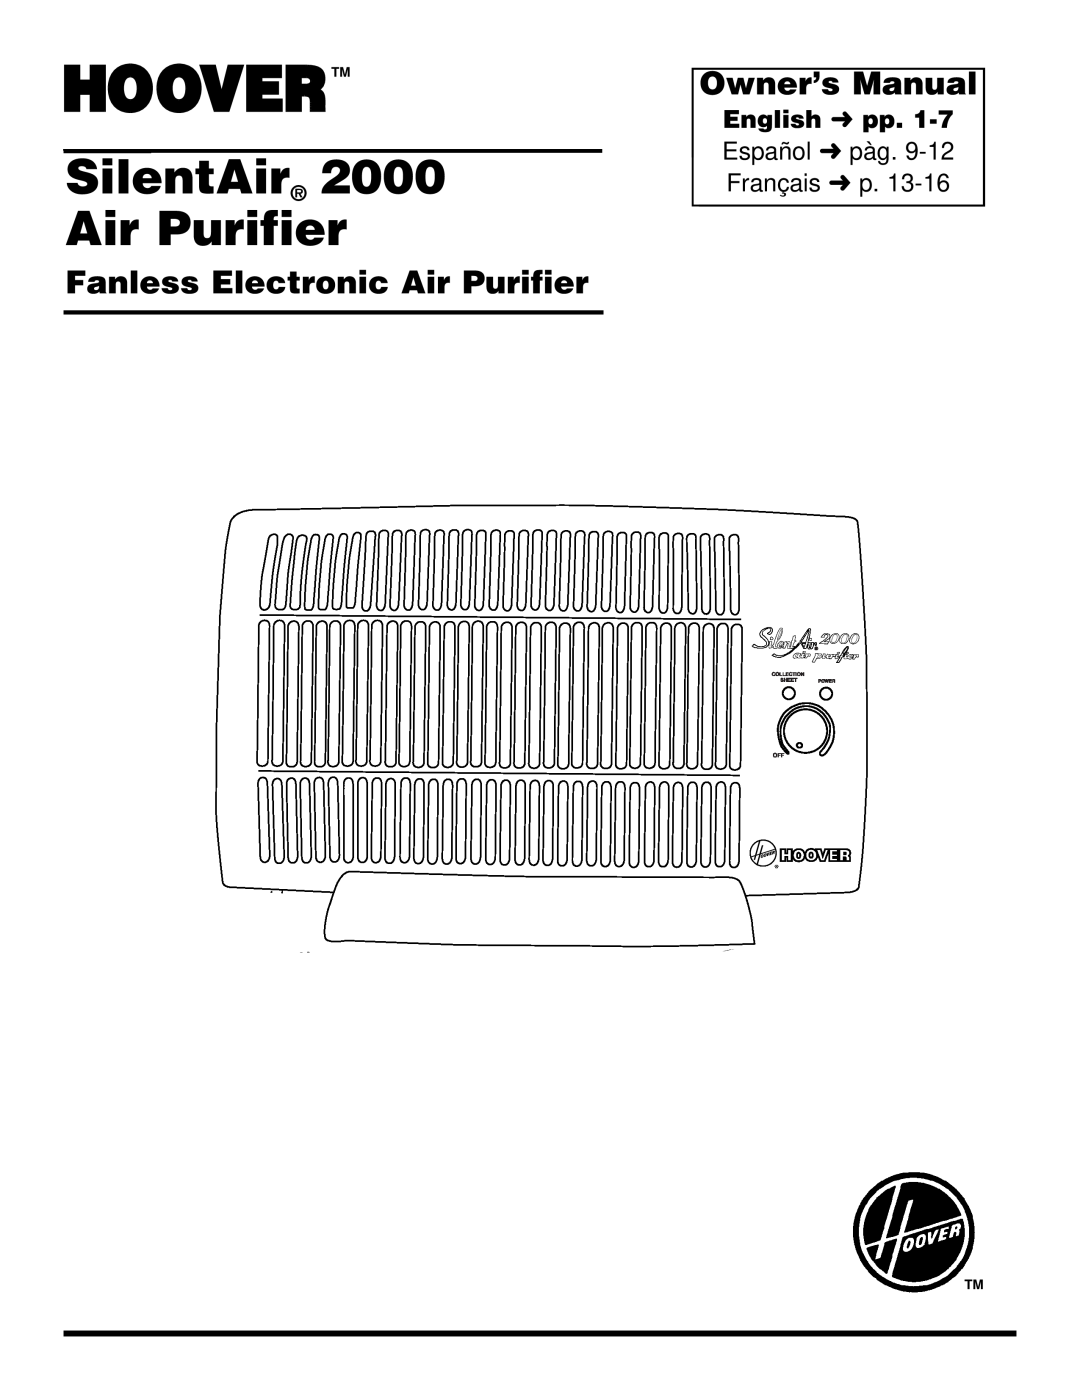 Hoover SilentAir 2000 owner manual Fanless Electronic Air Purifier, SilentAir Air Purifier 